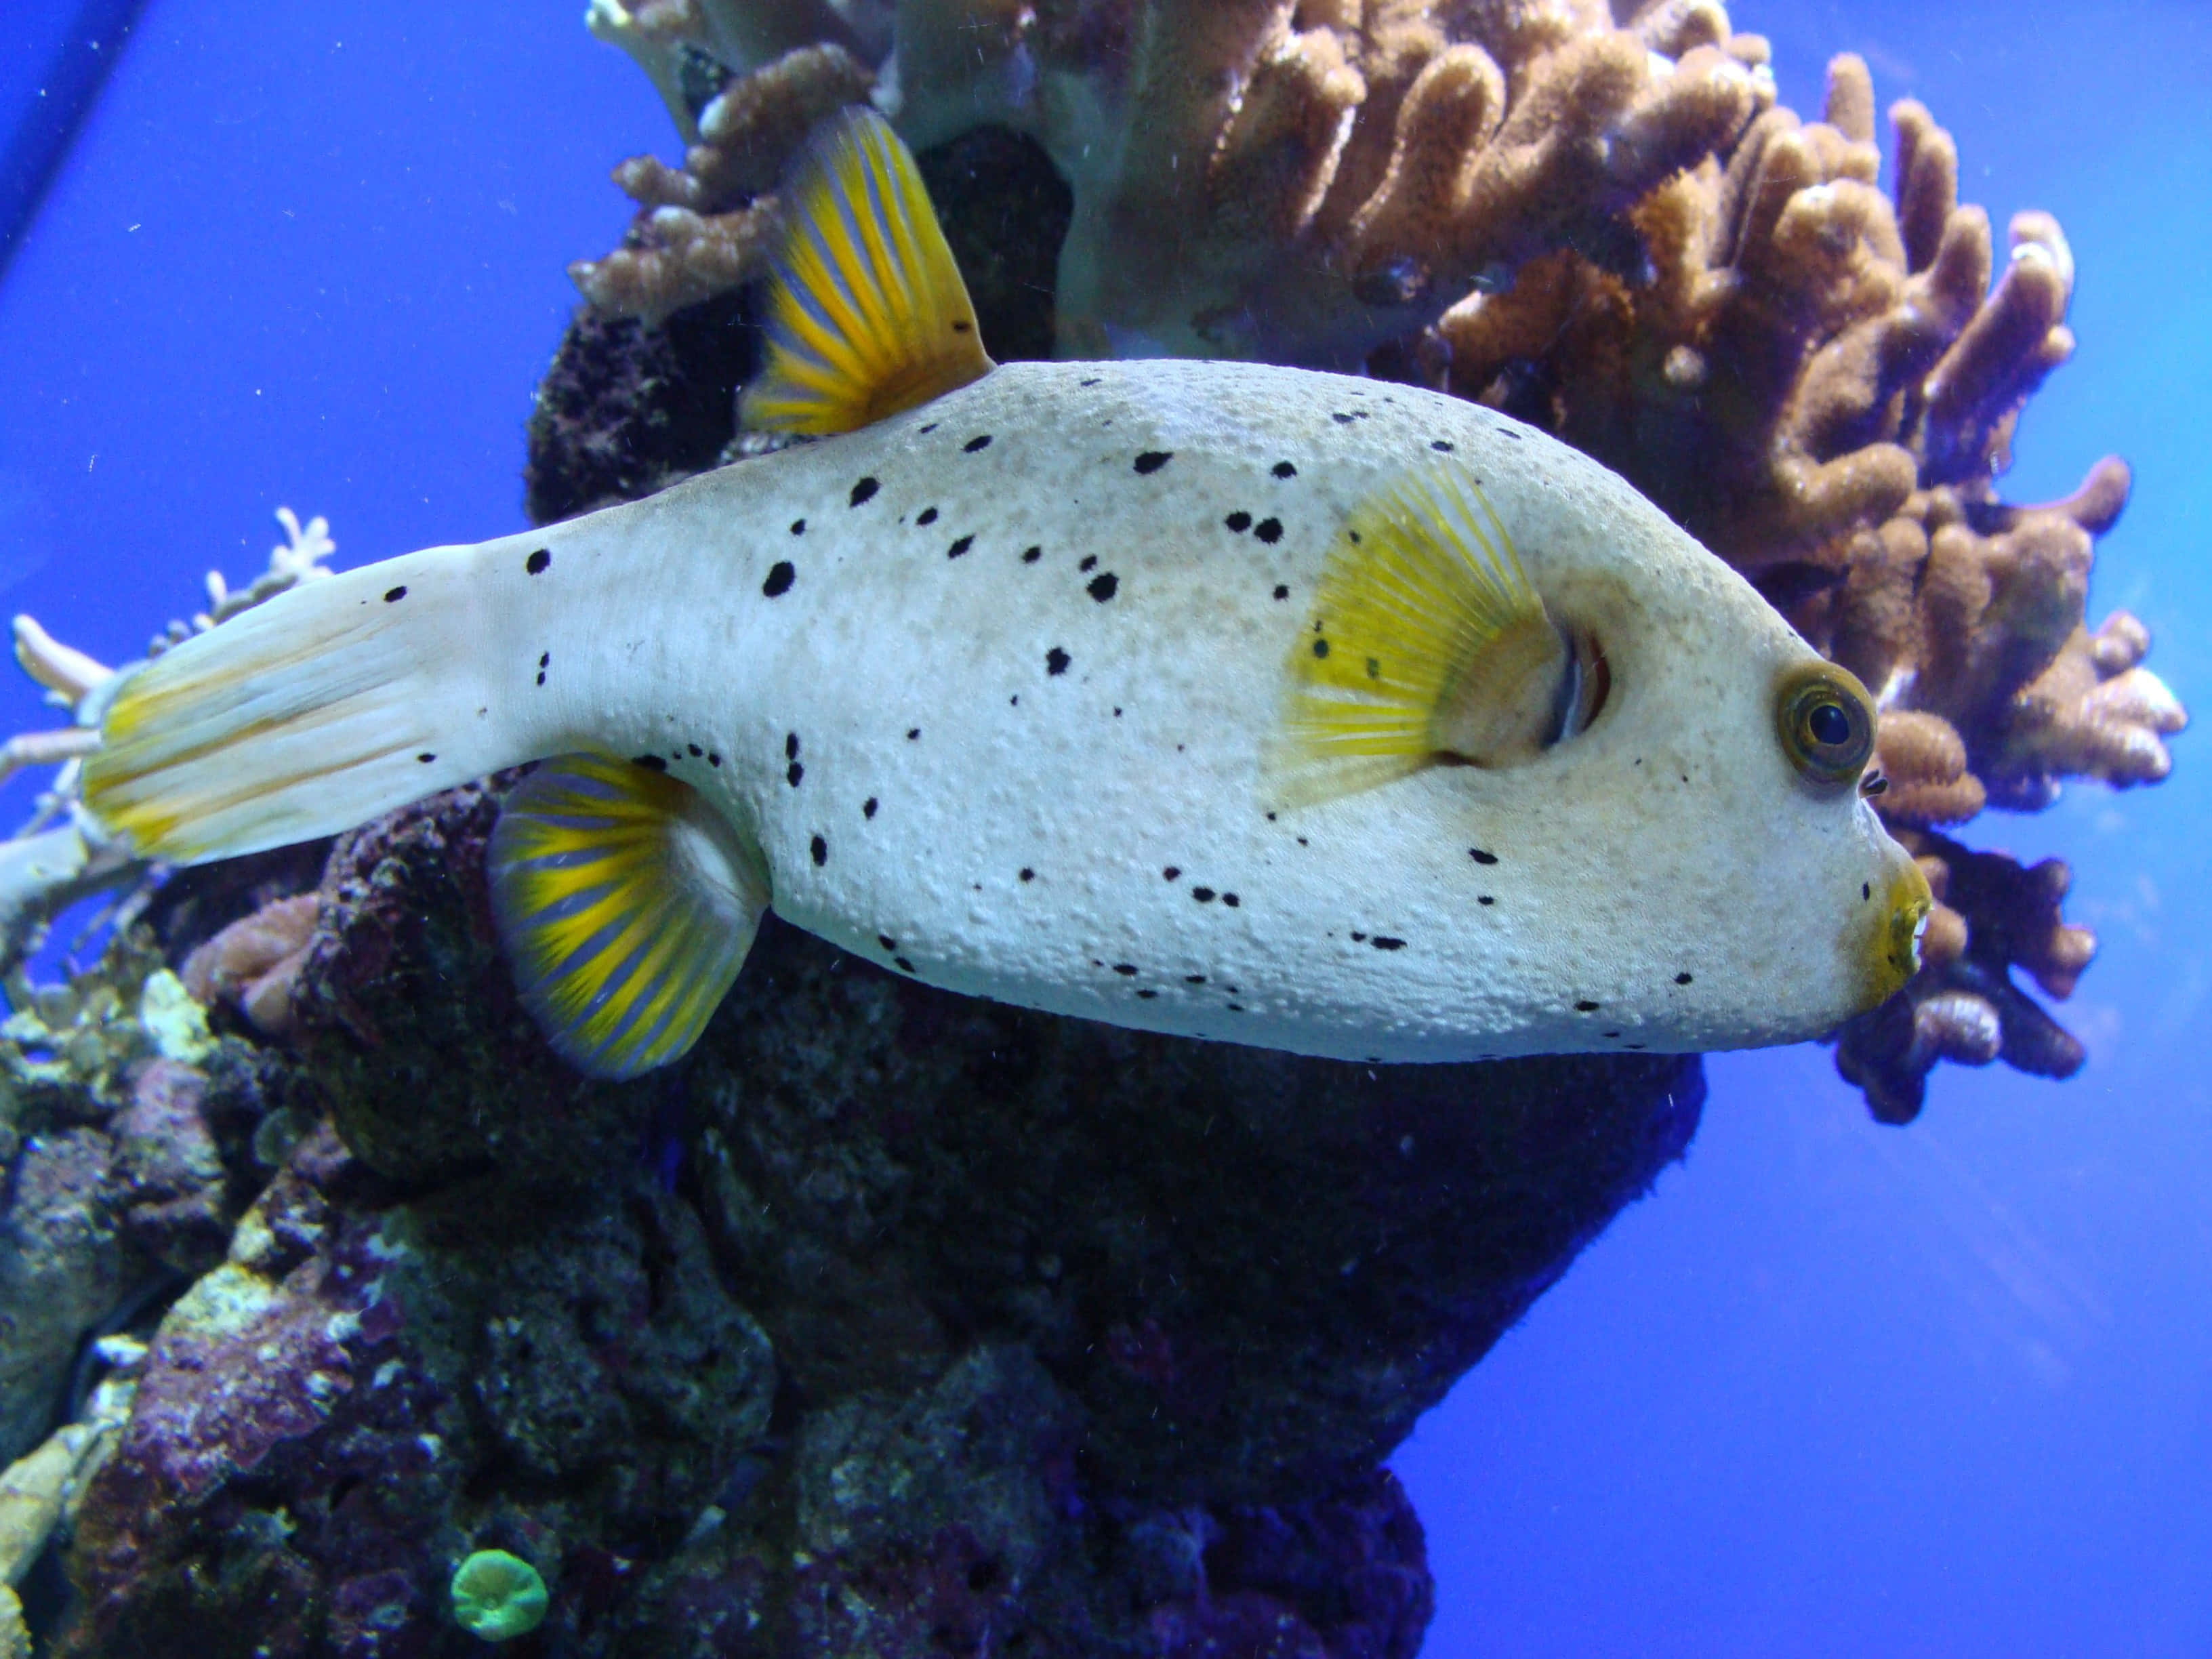 Stunning Close-up Of A Vibrant Pufferfish